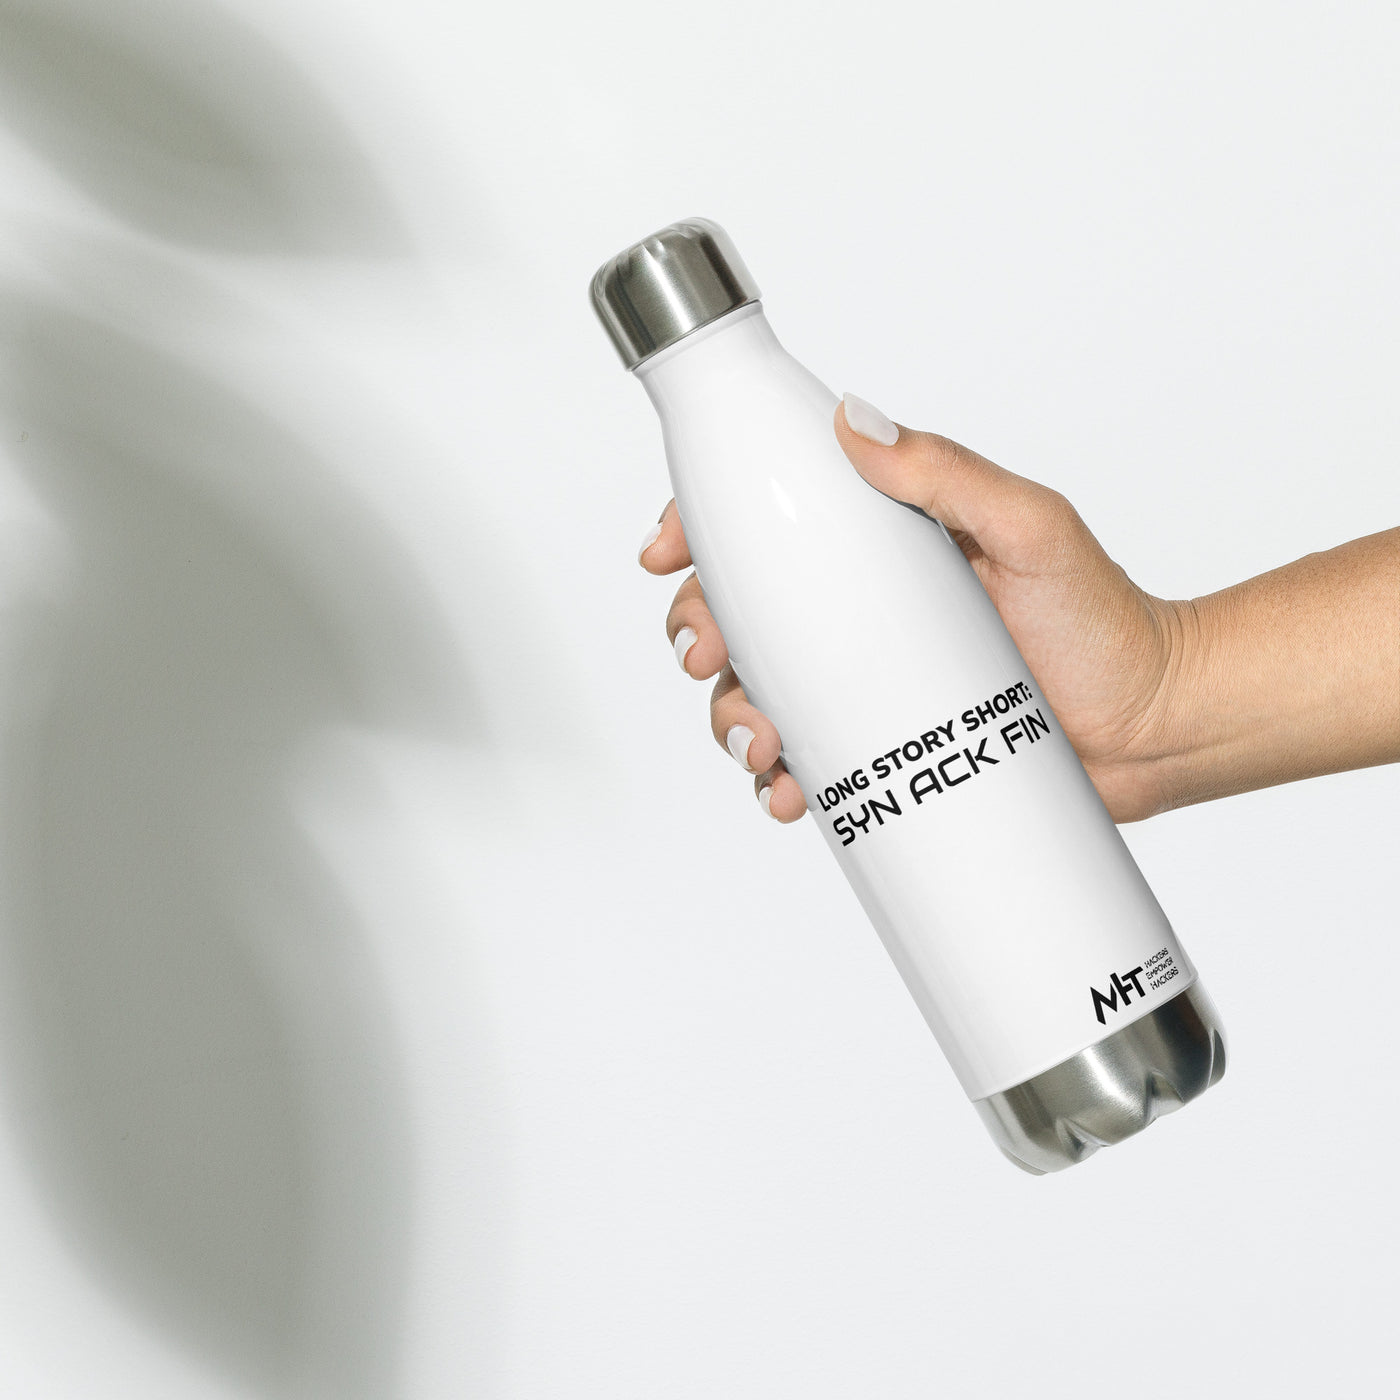 Long story short - Stainless Steel Water Bottle